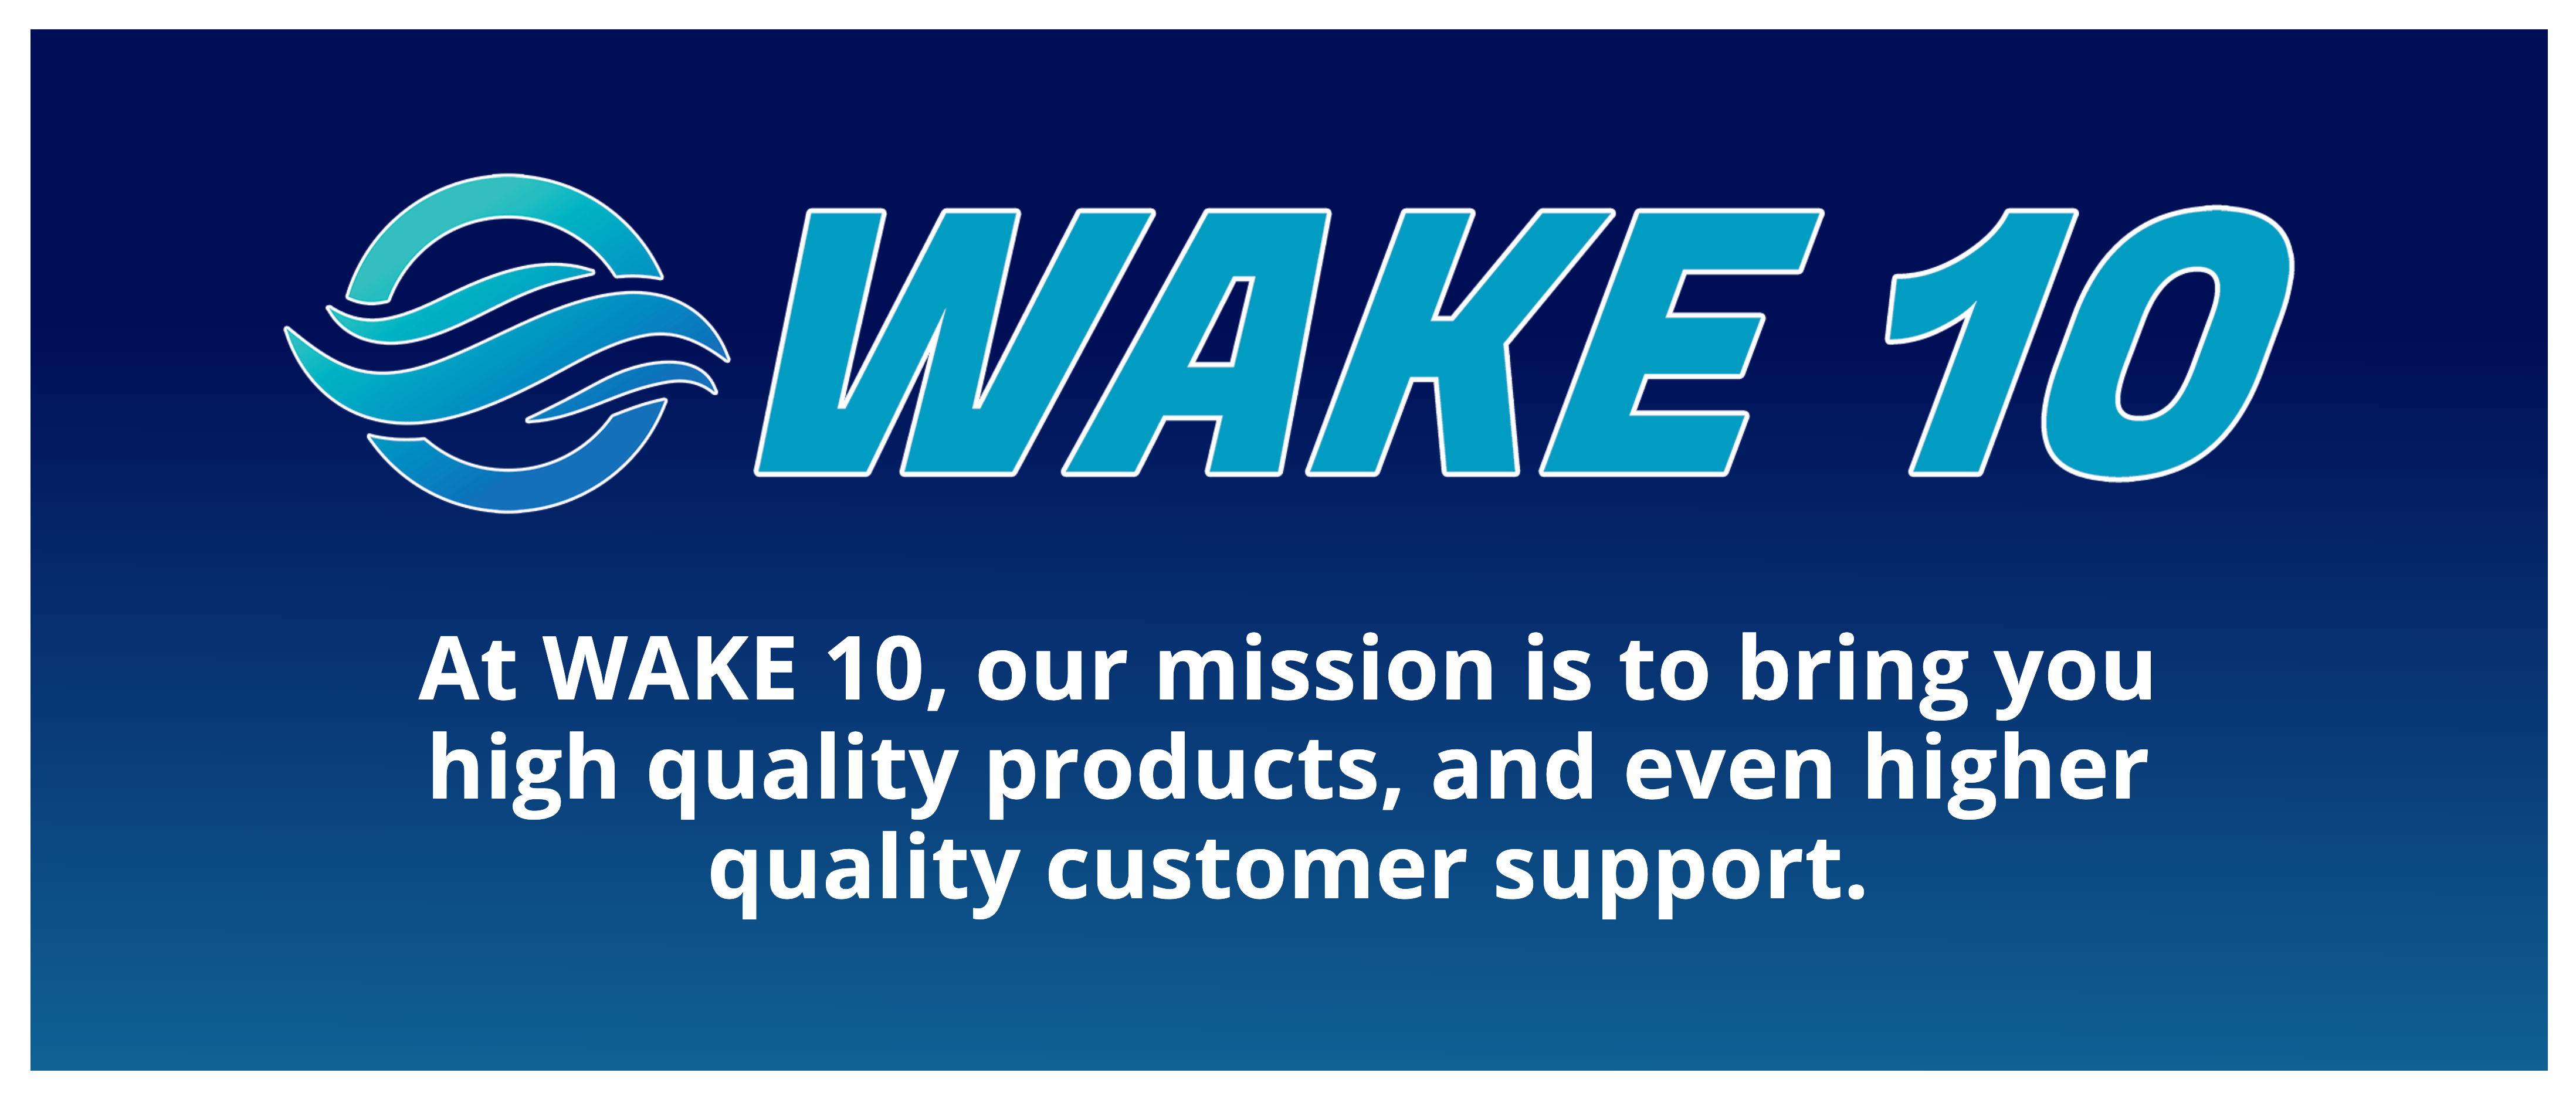 Wake 10 Mission Statement